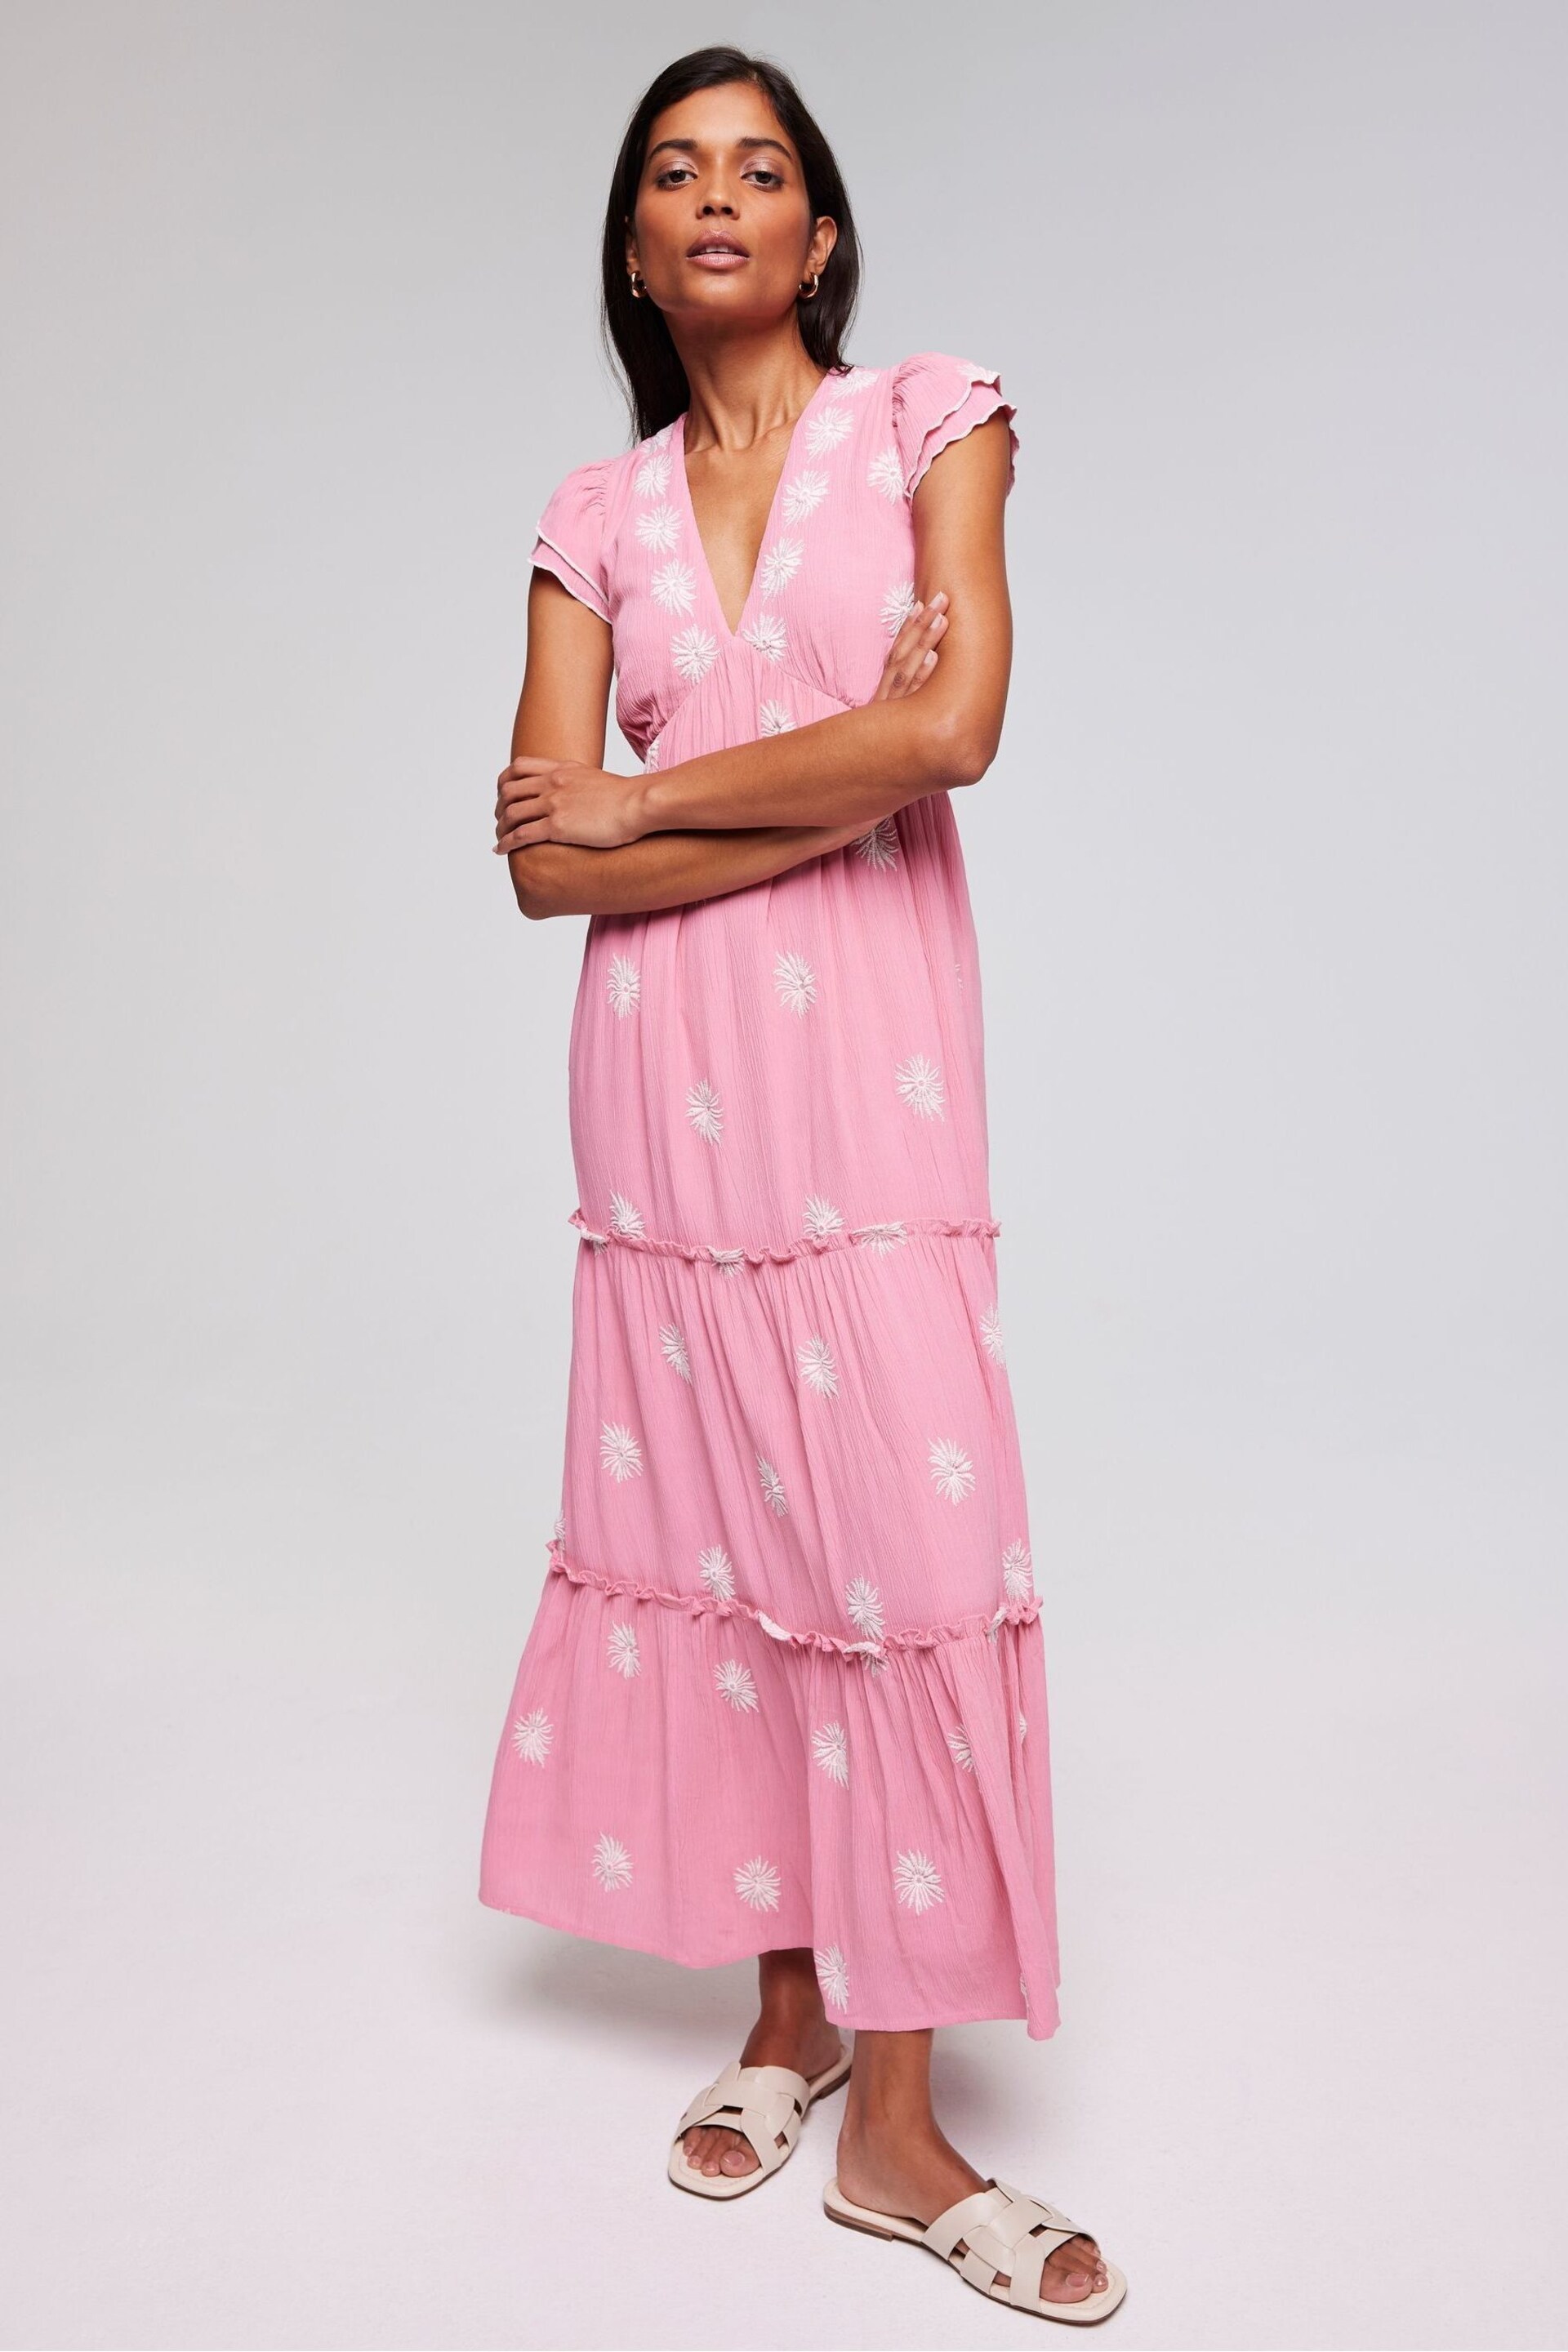 Mint Velvet Pink Floral Embroidered Maxi Dress - Image 1 of 4